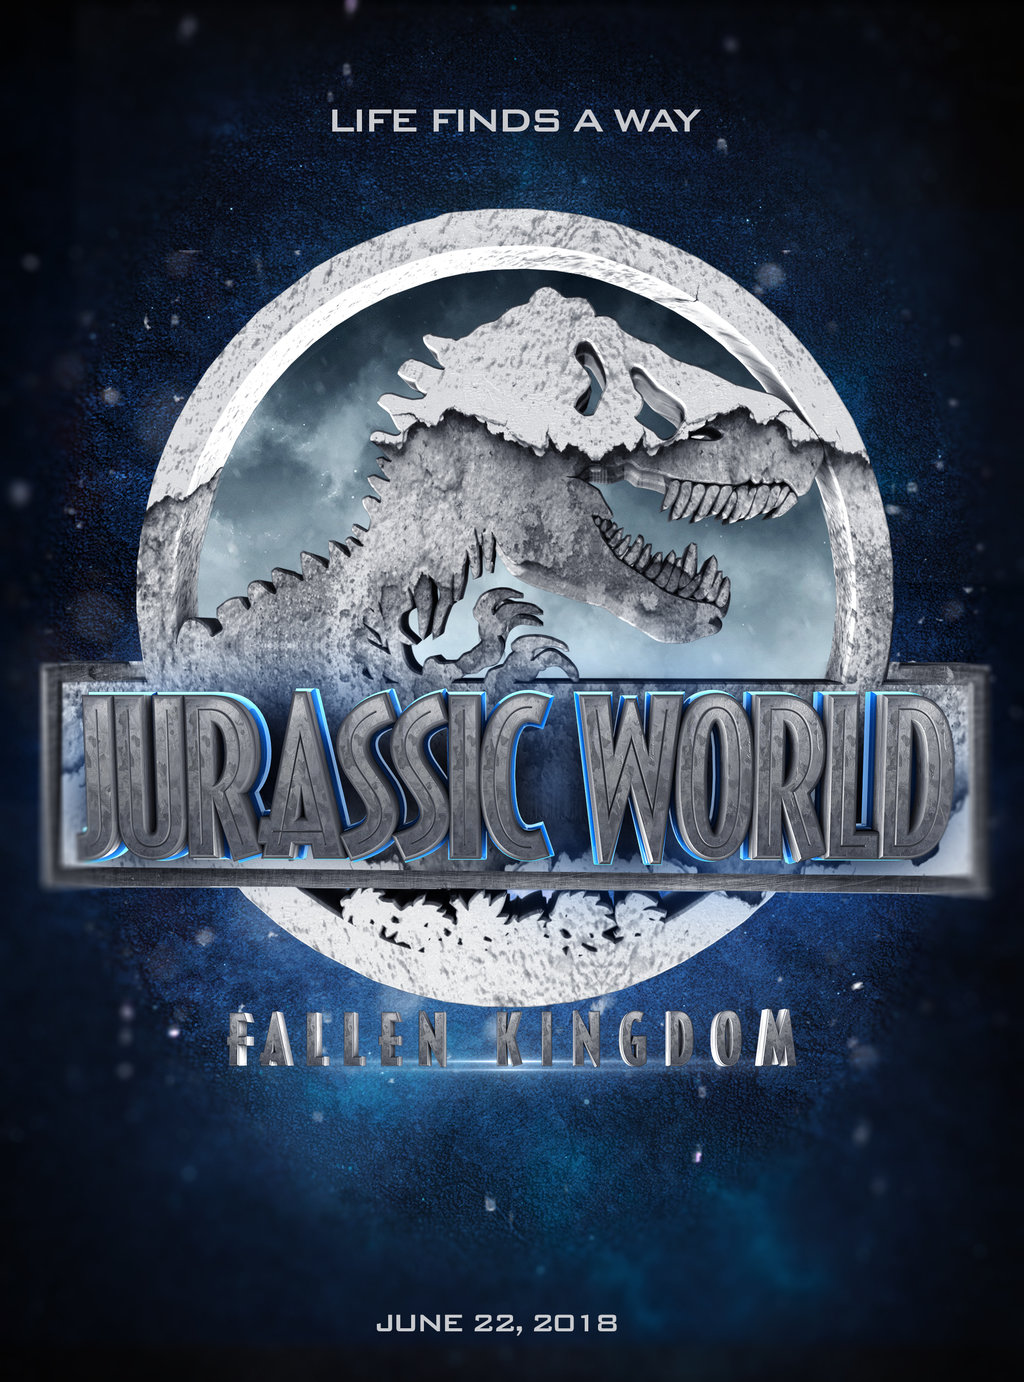 jurassic_world___fallen_kingdom_logo_fan_made_by_fantomvisual-dbdqmpk.jpg